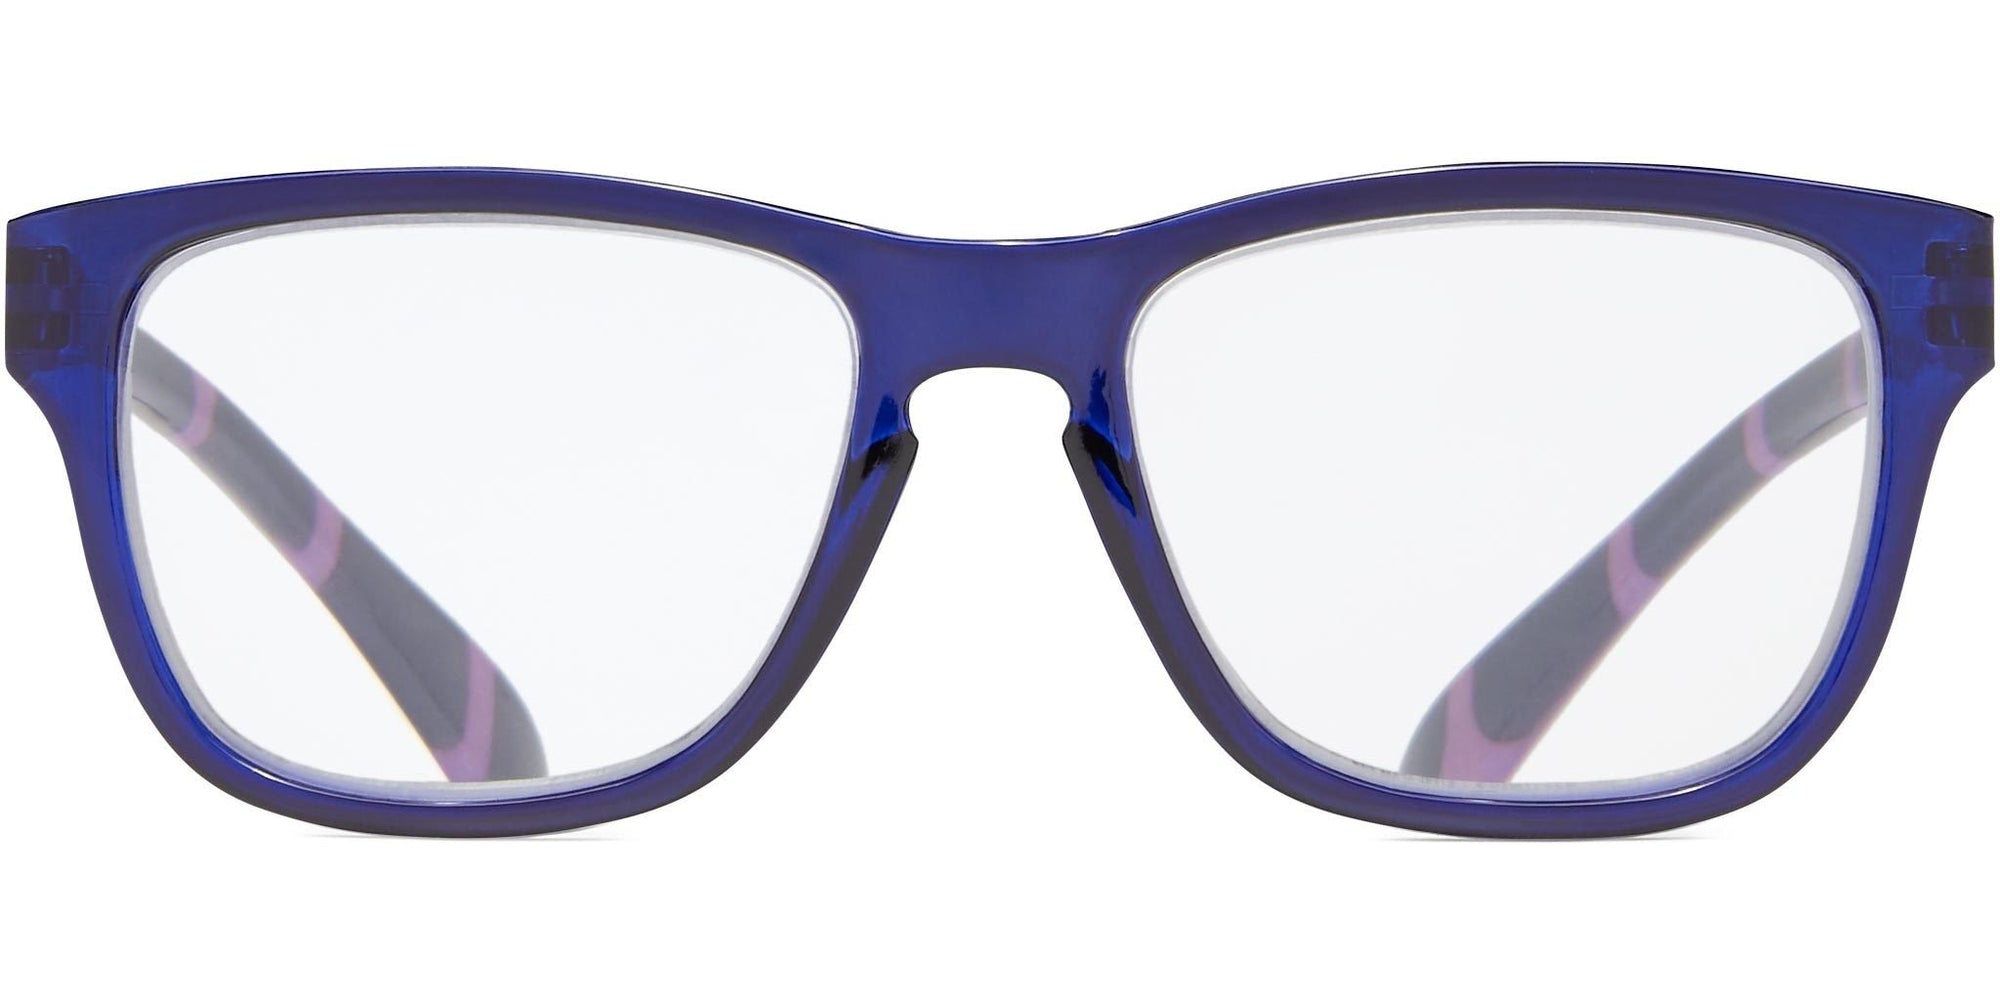 Athena - Crystal Blue/Purple / 1.25 - Reading Glasses